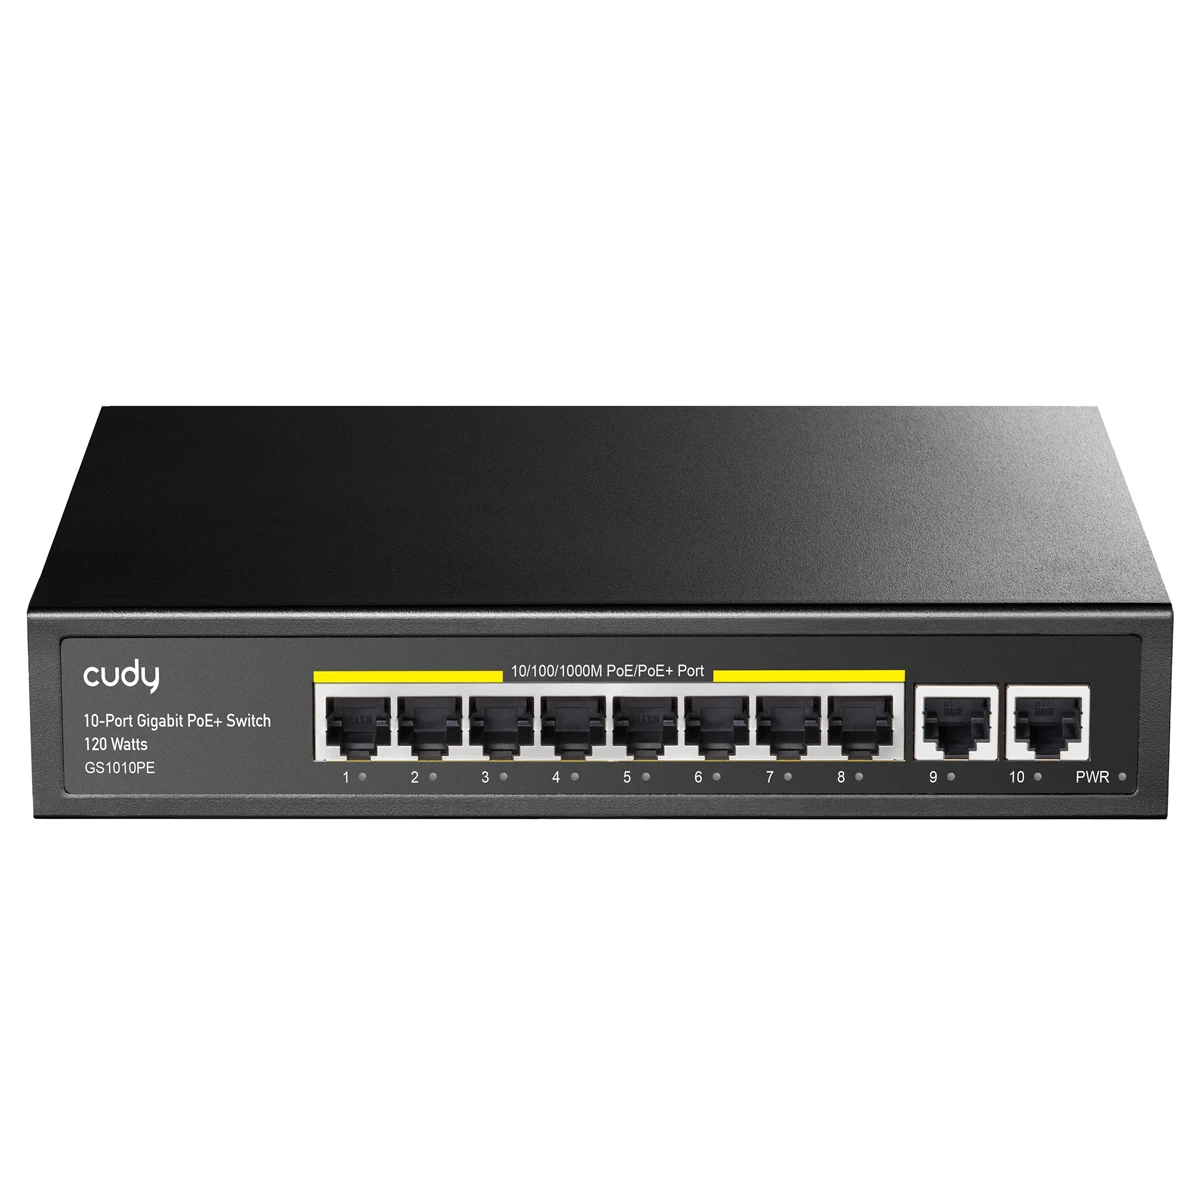 

Cudy GS1010PE 10-Port Gigabit Ethernet Unmanaged PoE Switch, with 8 x PoE+ @ 120W, Desktop/Rackmount, CCTV/VLAN Mode, 802.3af/at